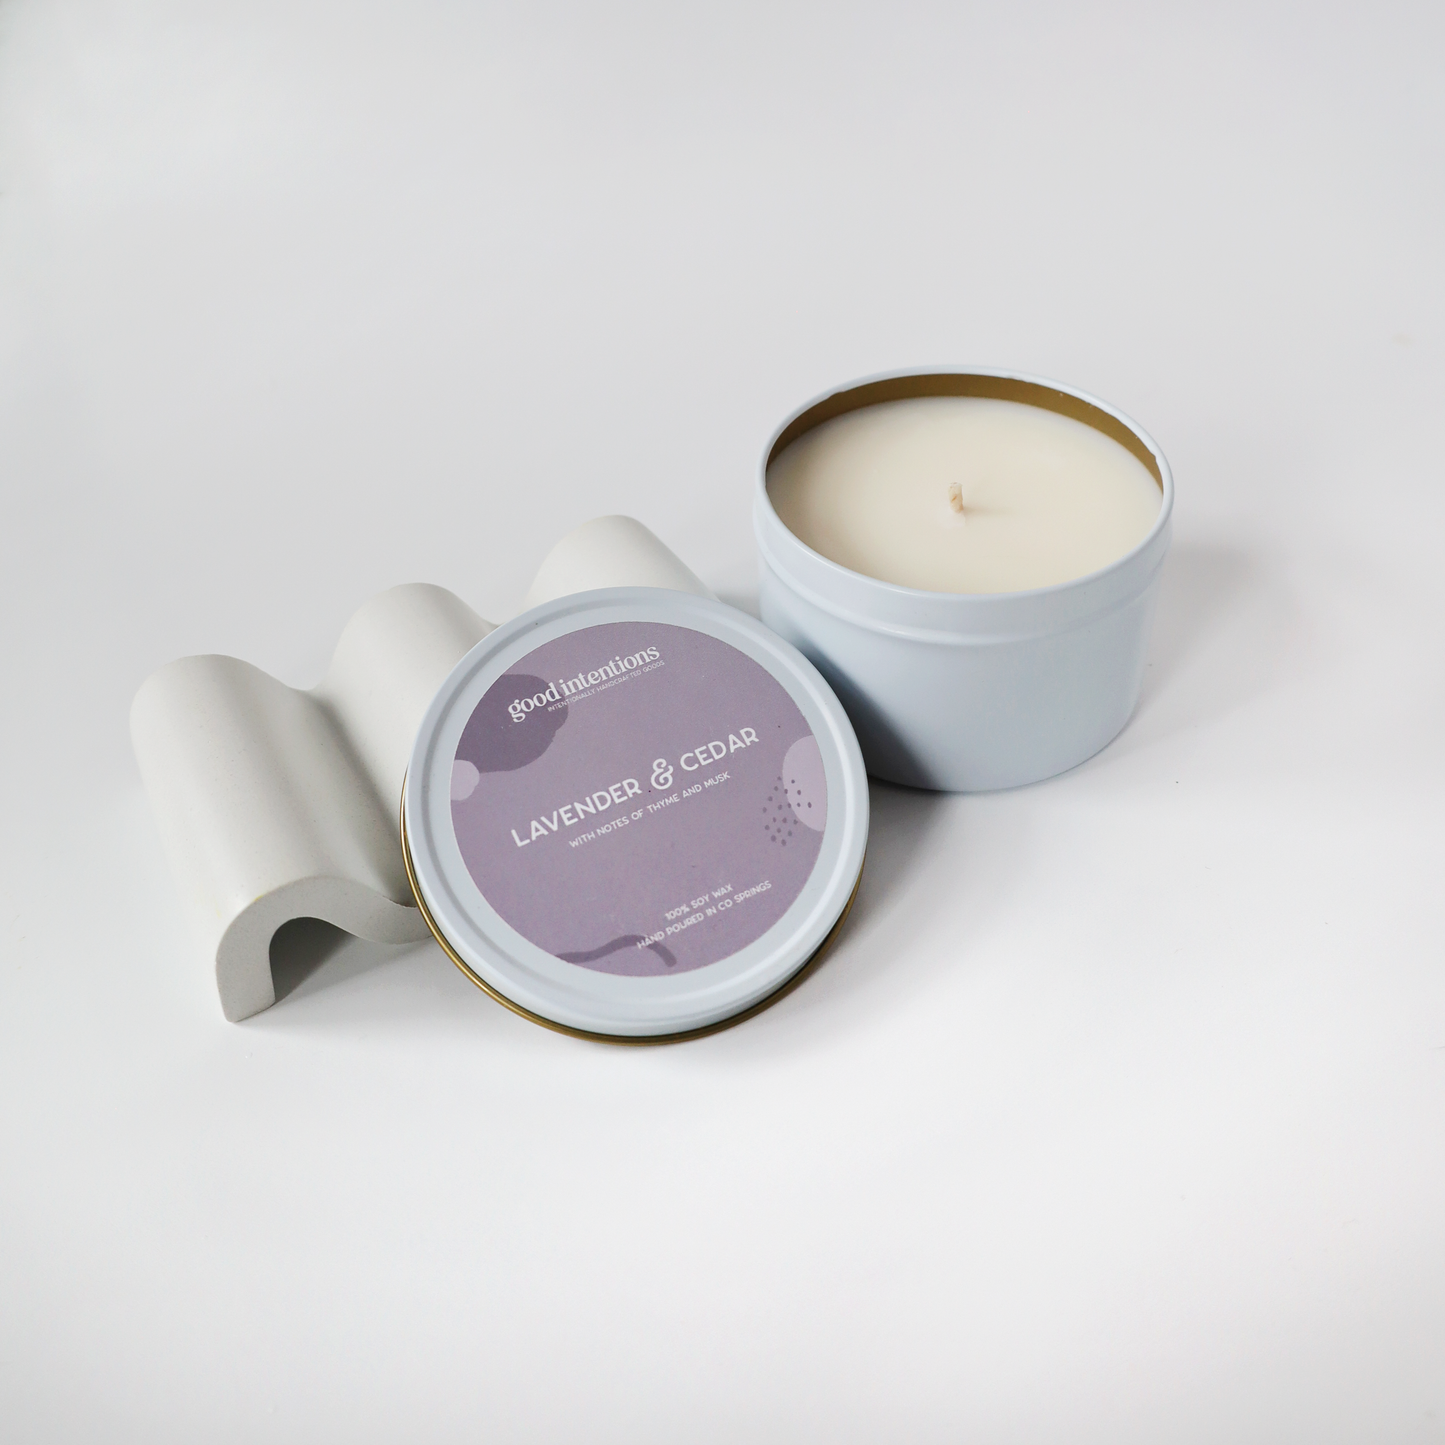 Lavender & Cedar Tin Candle